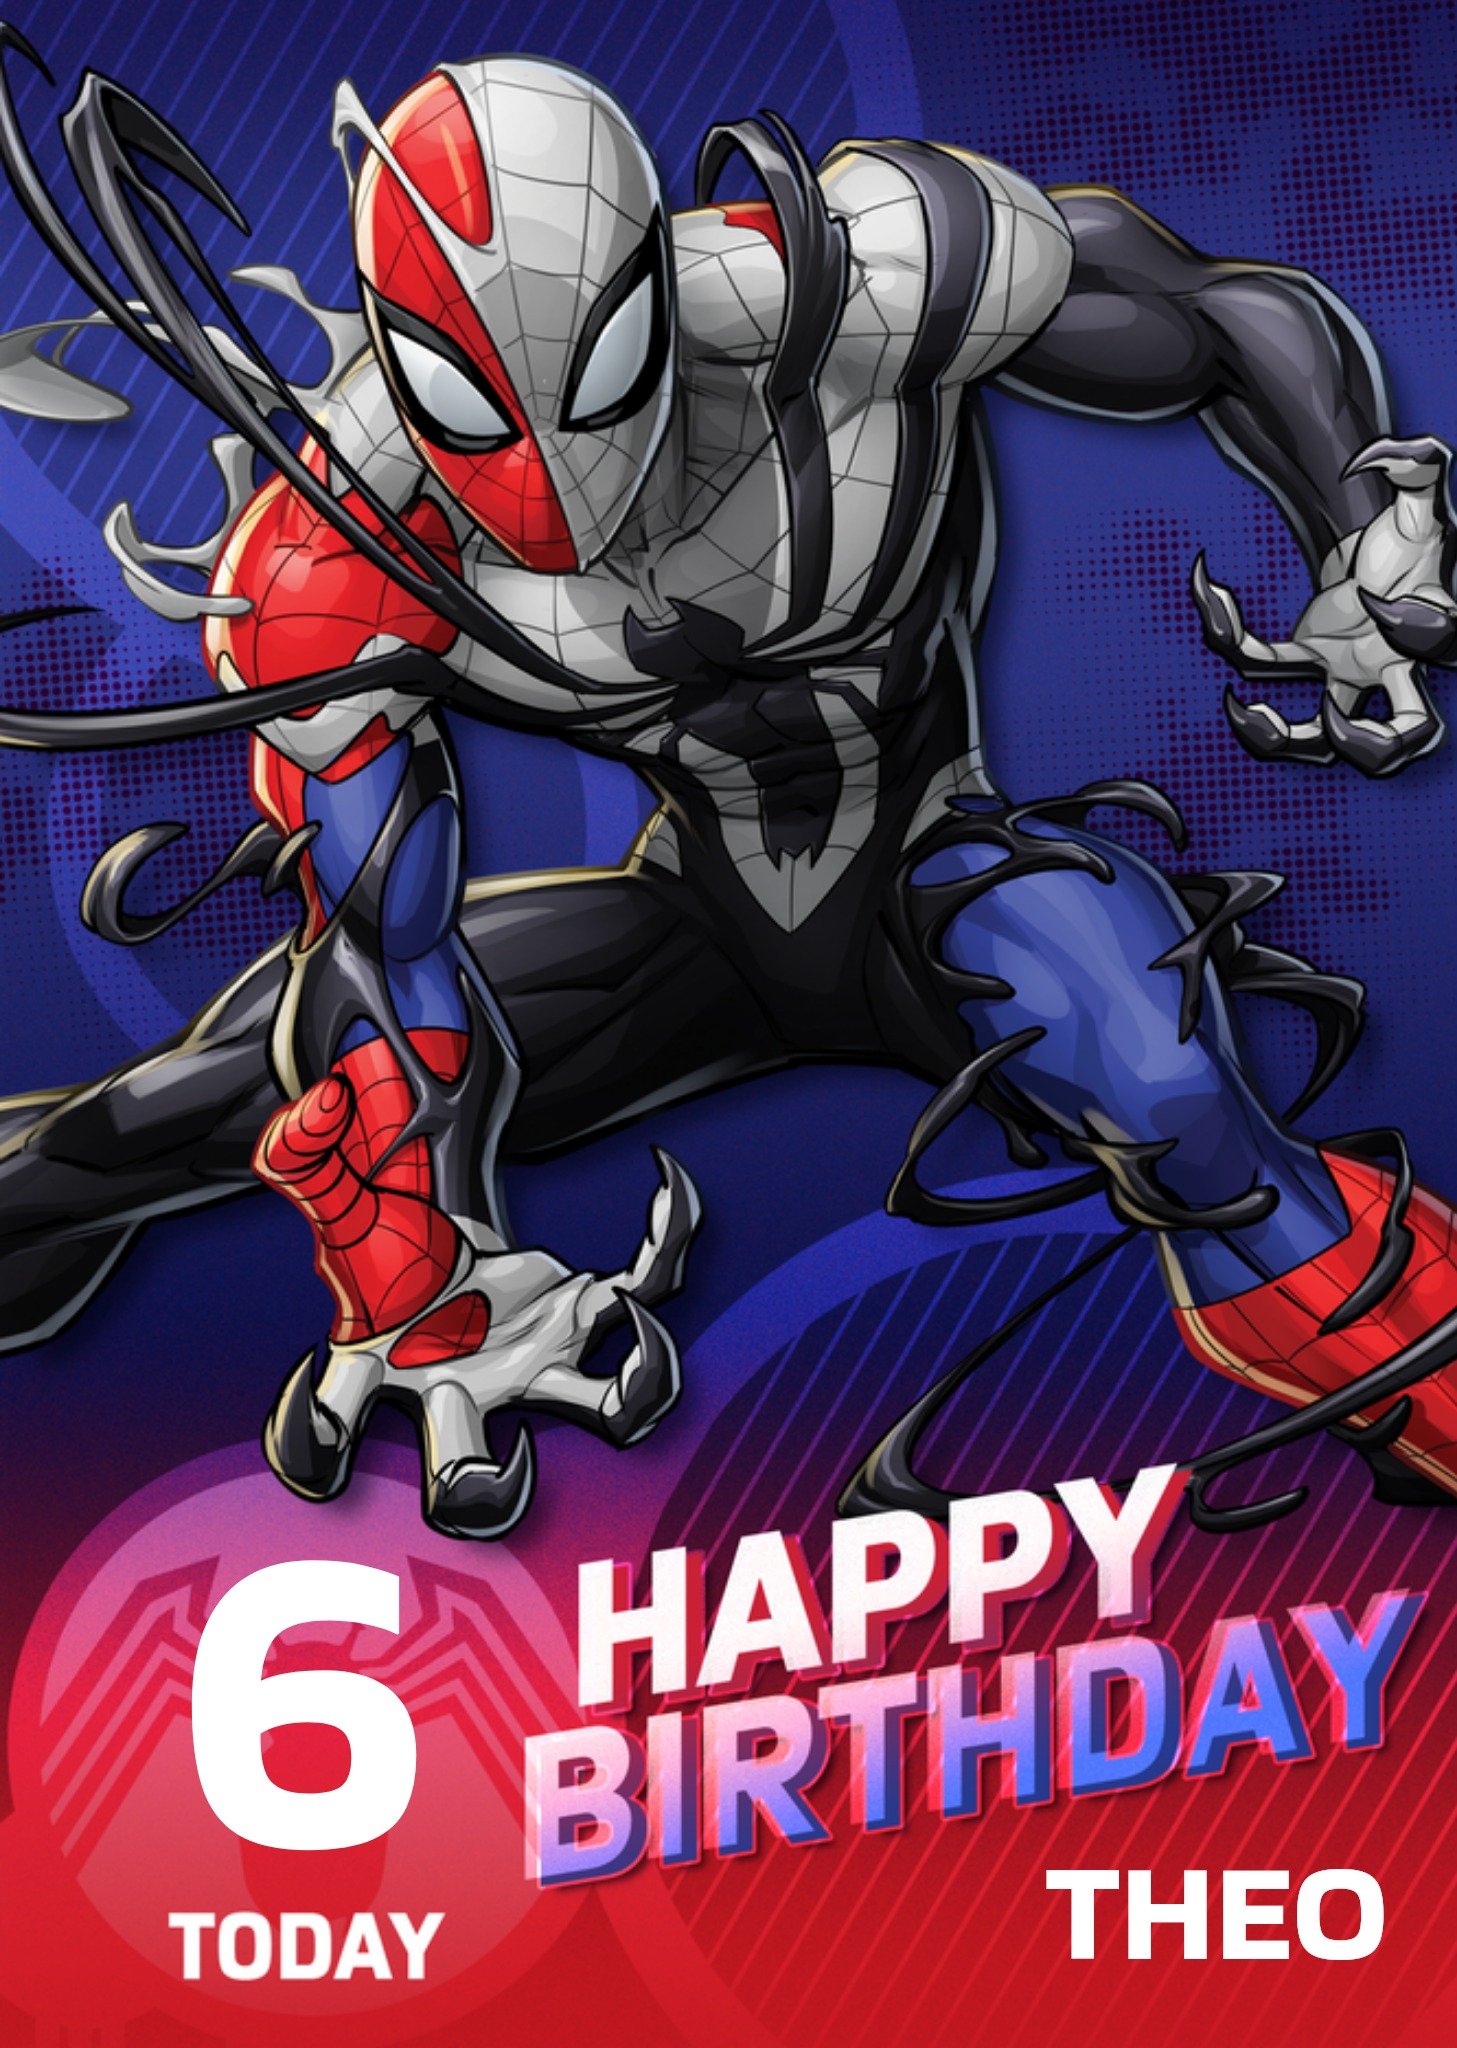 Disney Spider-Man Maximum Venom 6 Today Happy Birthday Card Ecard